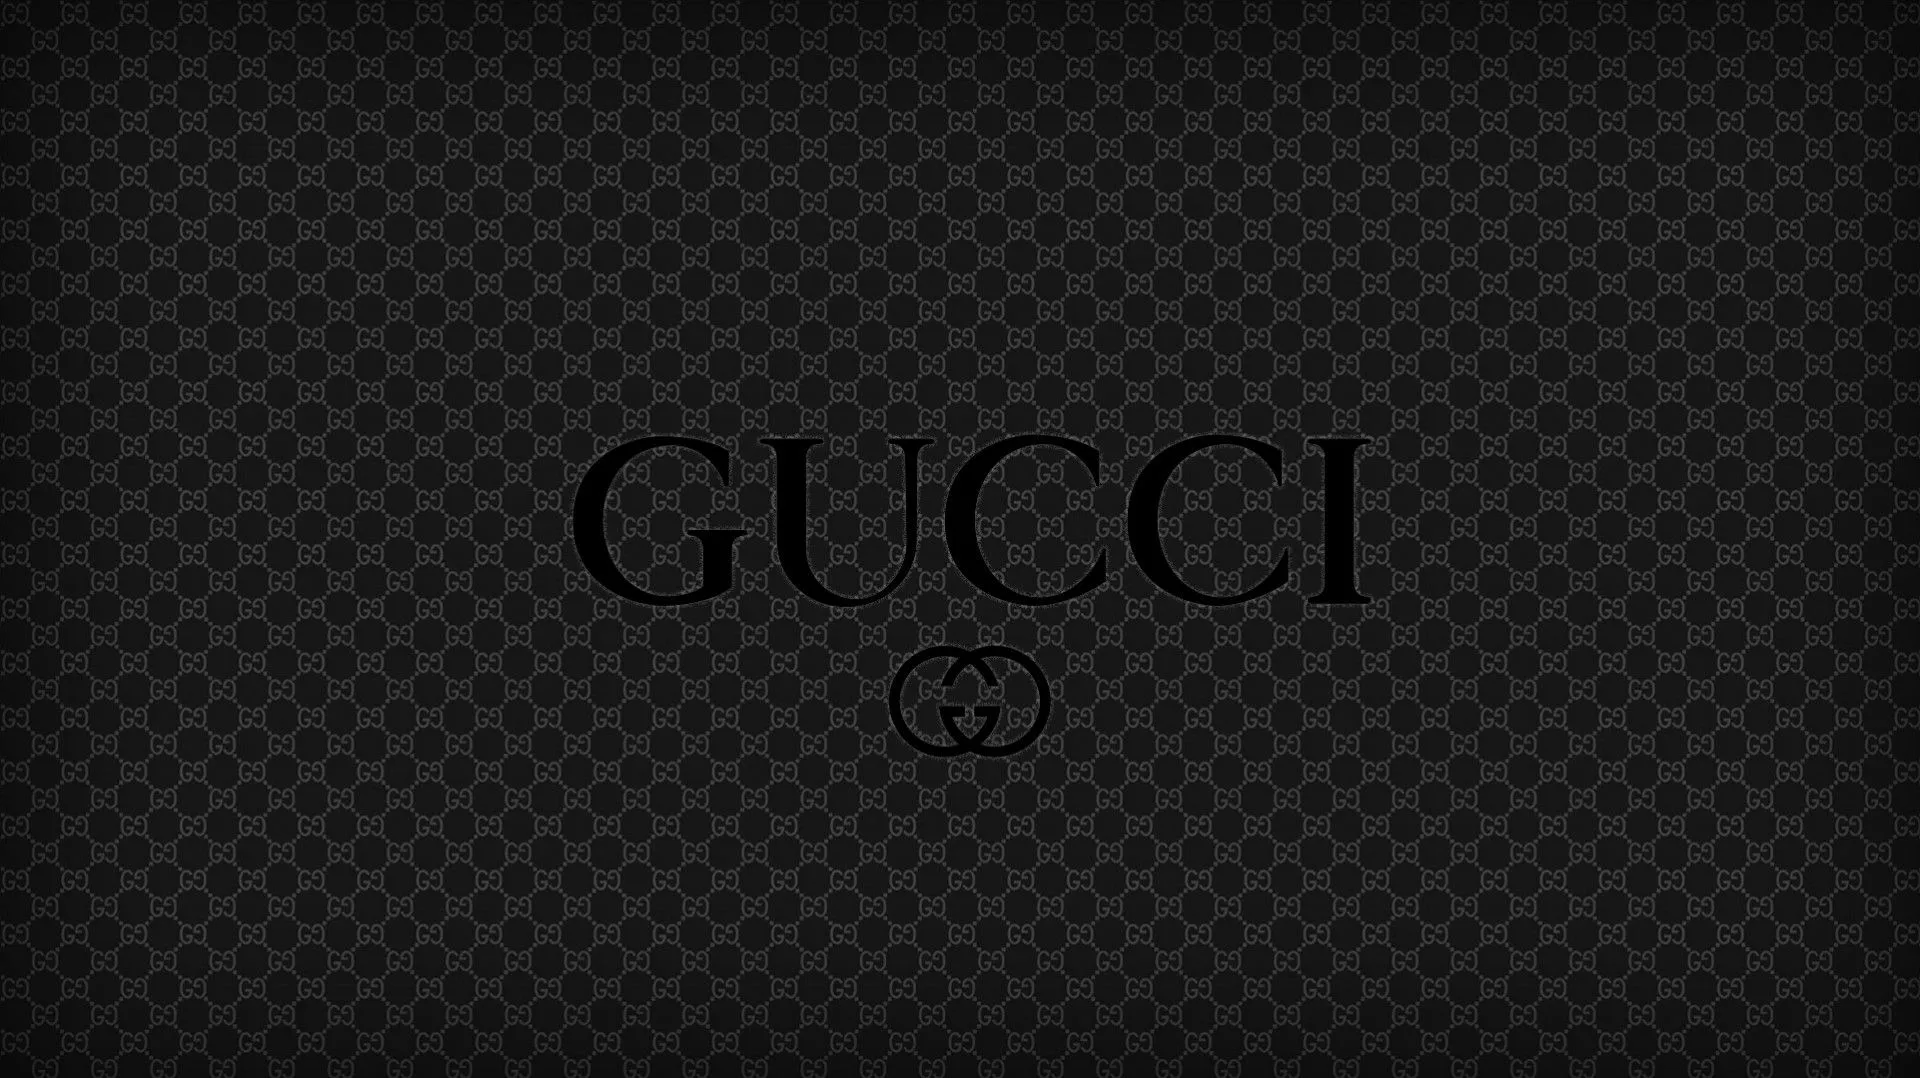 Gucci logo loot bag - PAYDAY 2 Mods - ModWorkshop